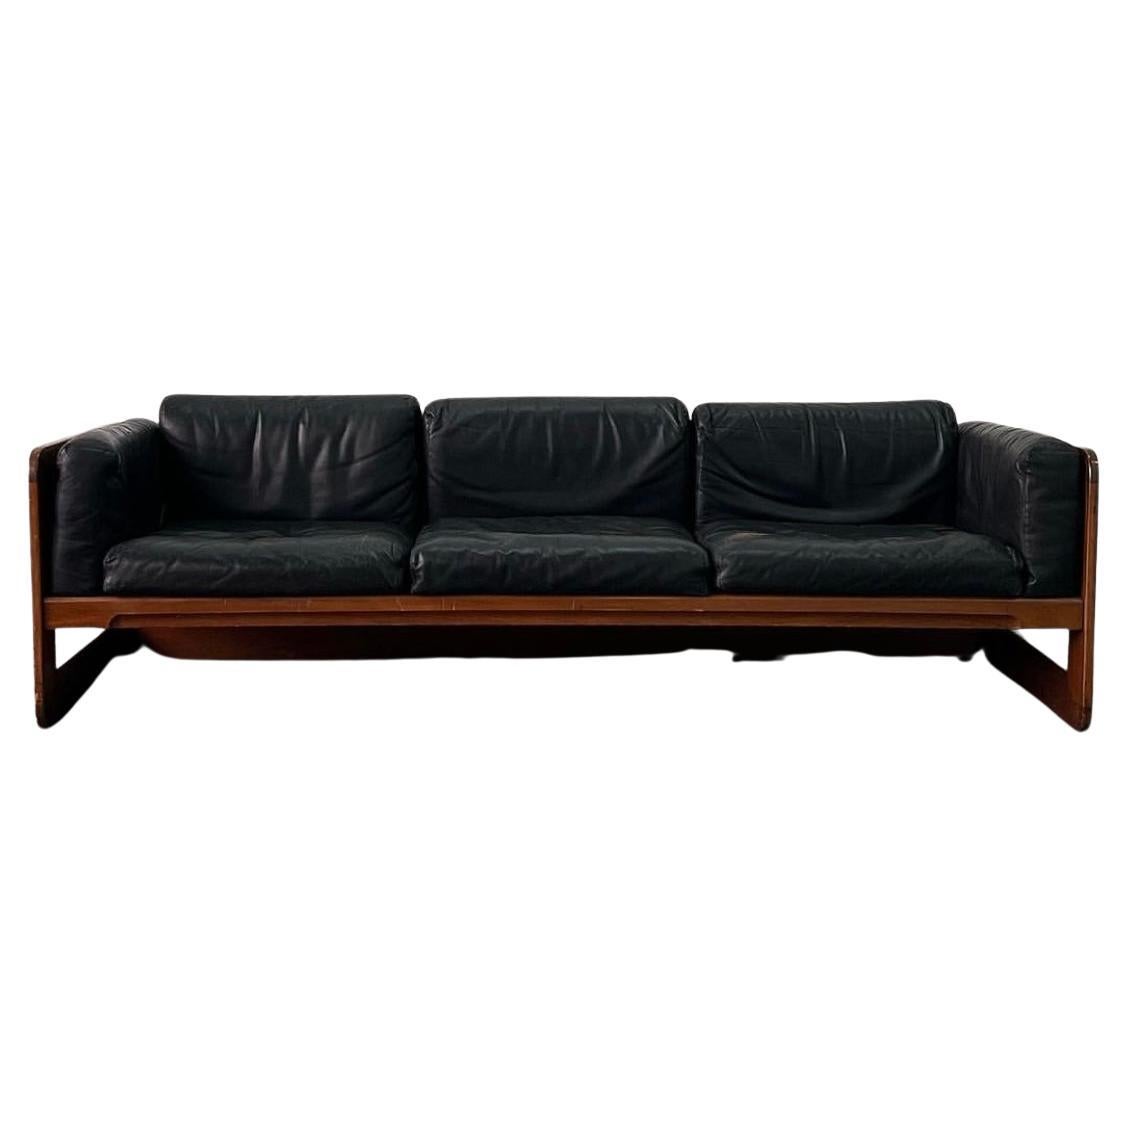 Leather Sofa by Giuseppe Raimondi by Stendig, 1970s